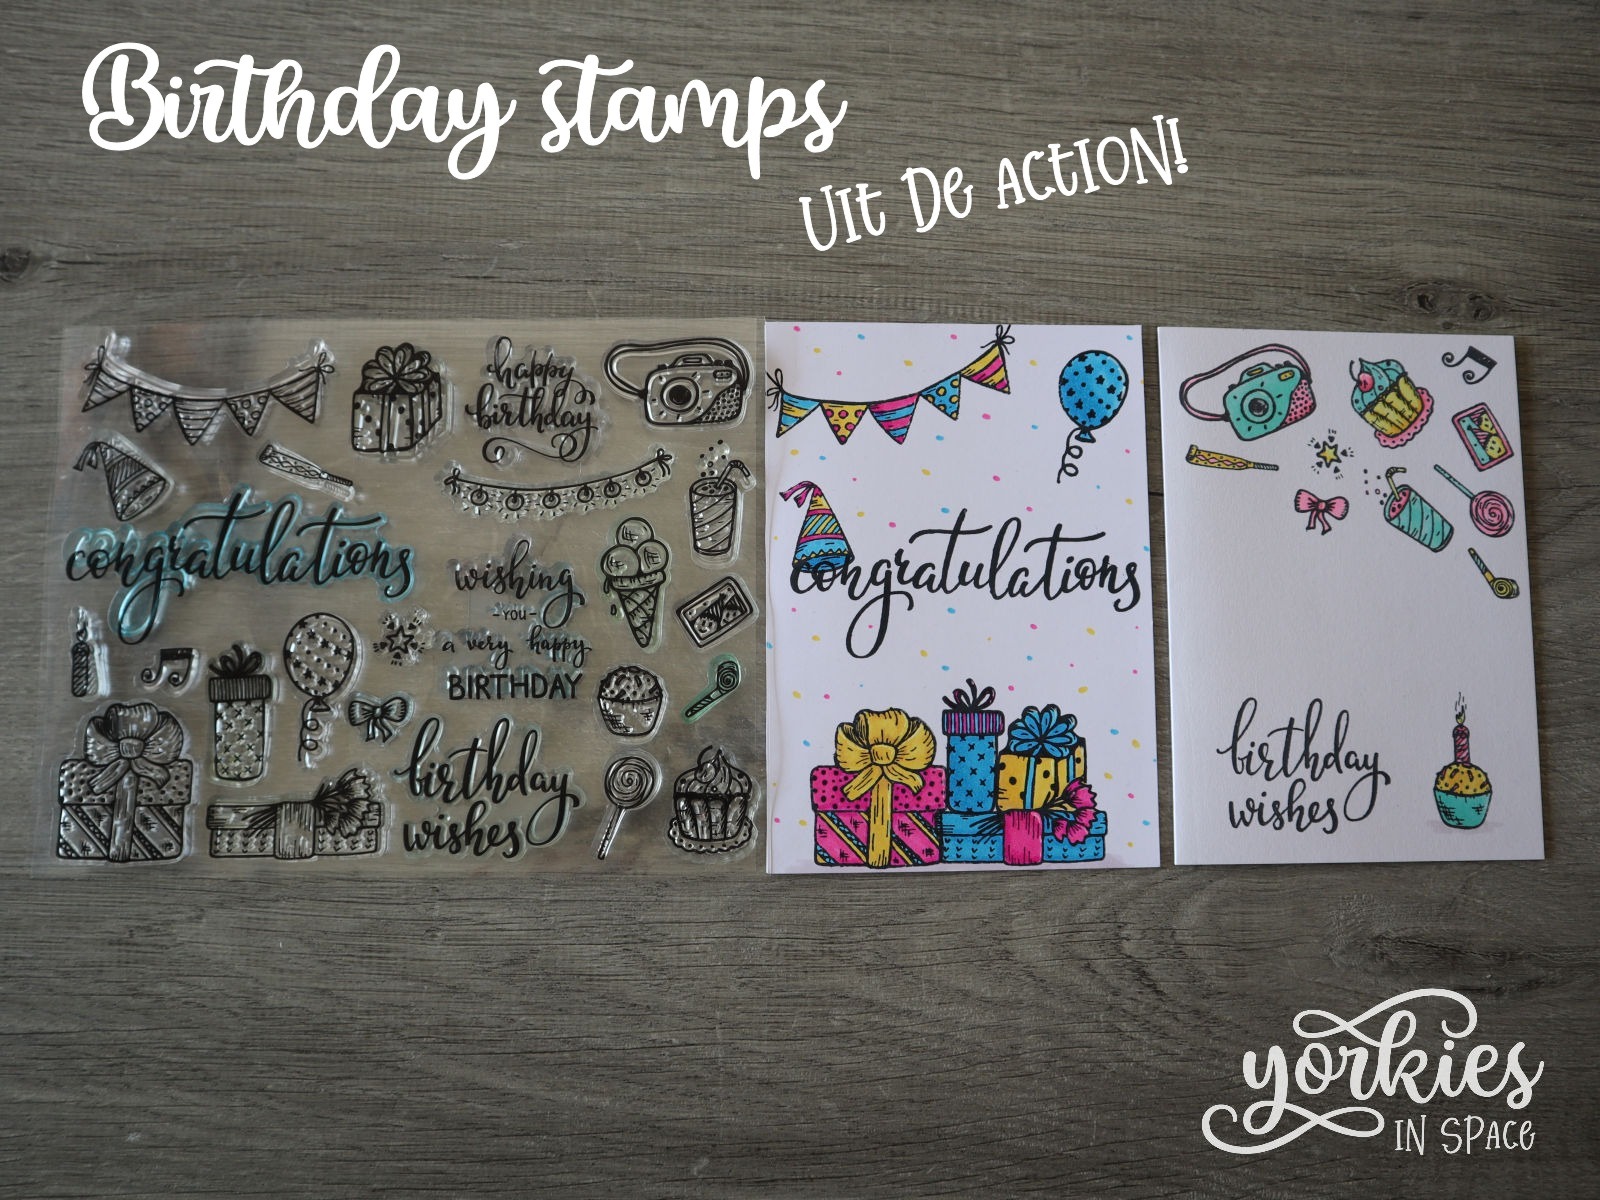 Birthday stamps